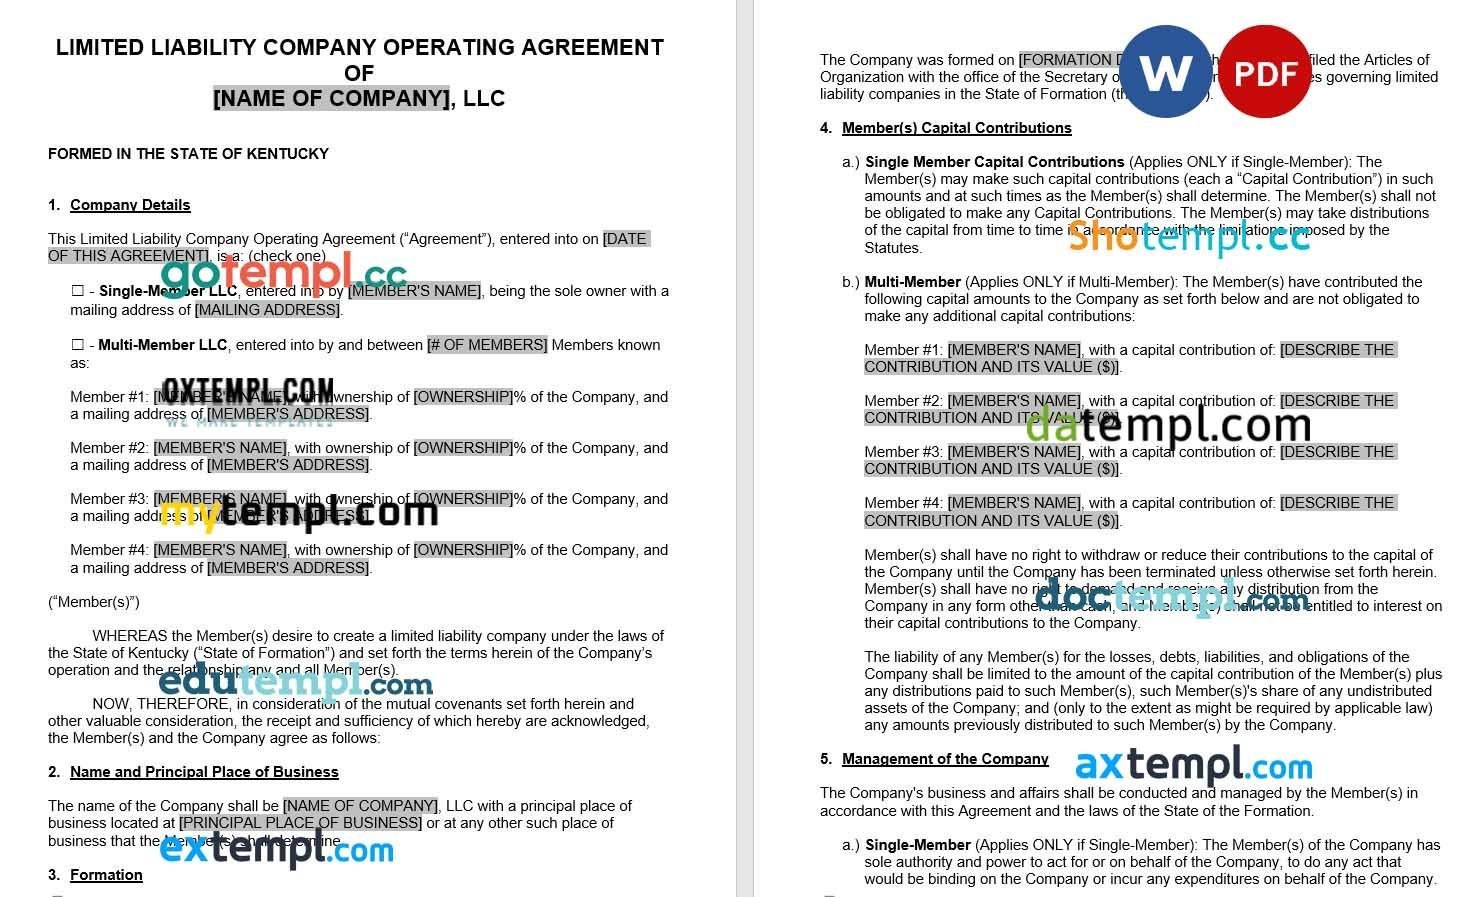 Kentucky LLC Operating Agreement Word example, fully editable